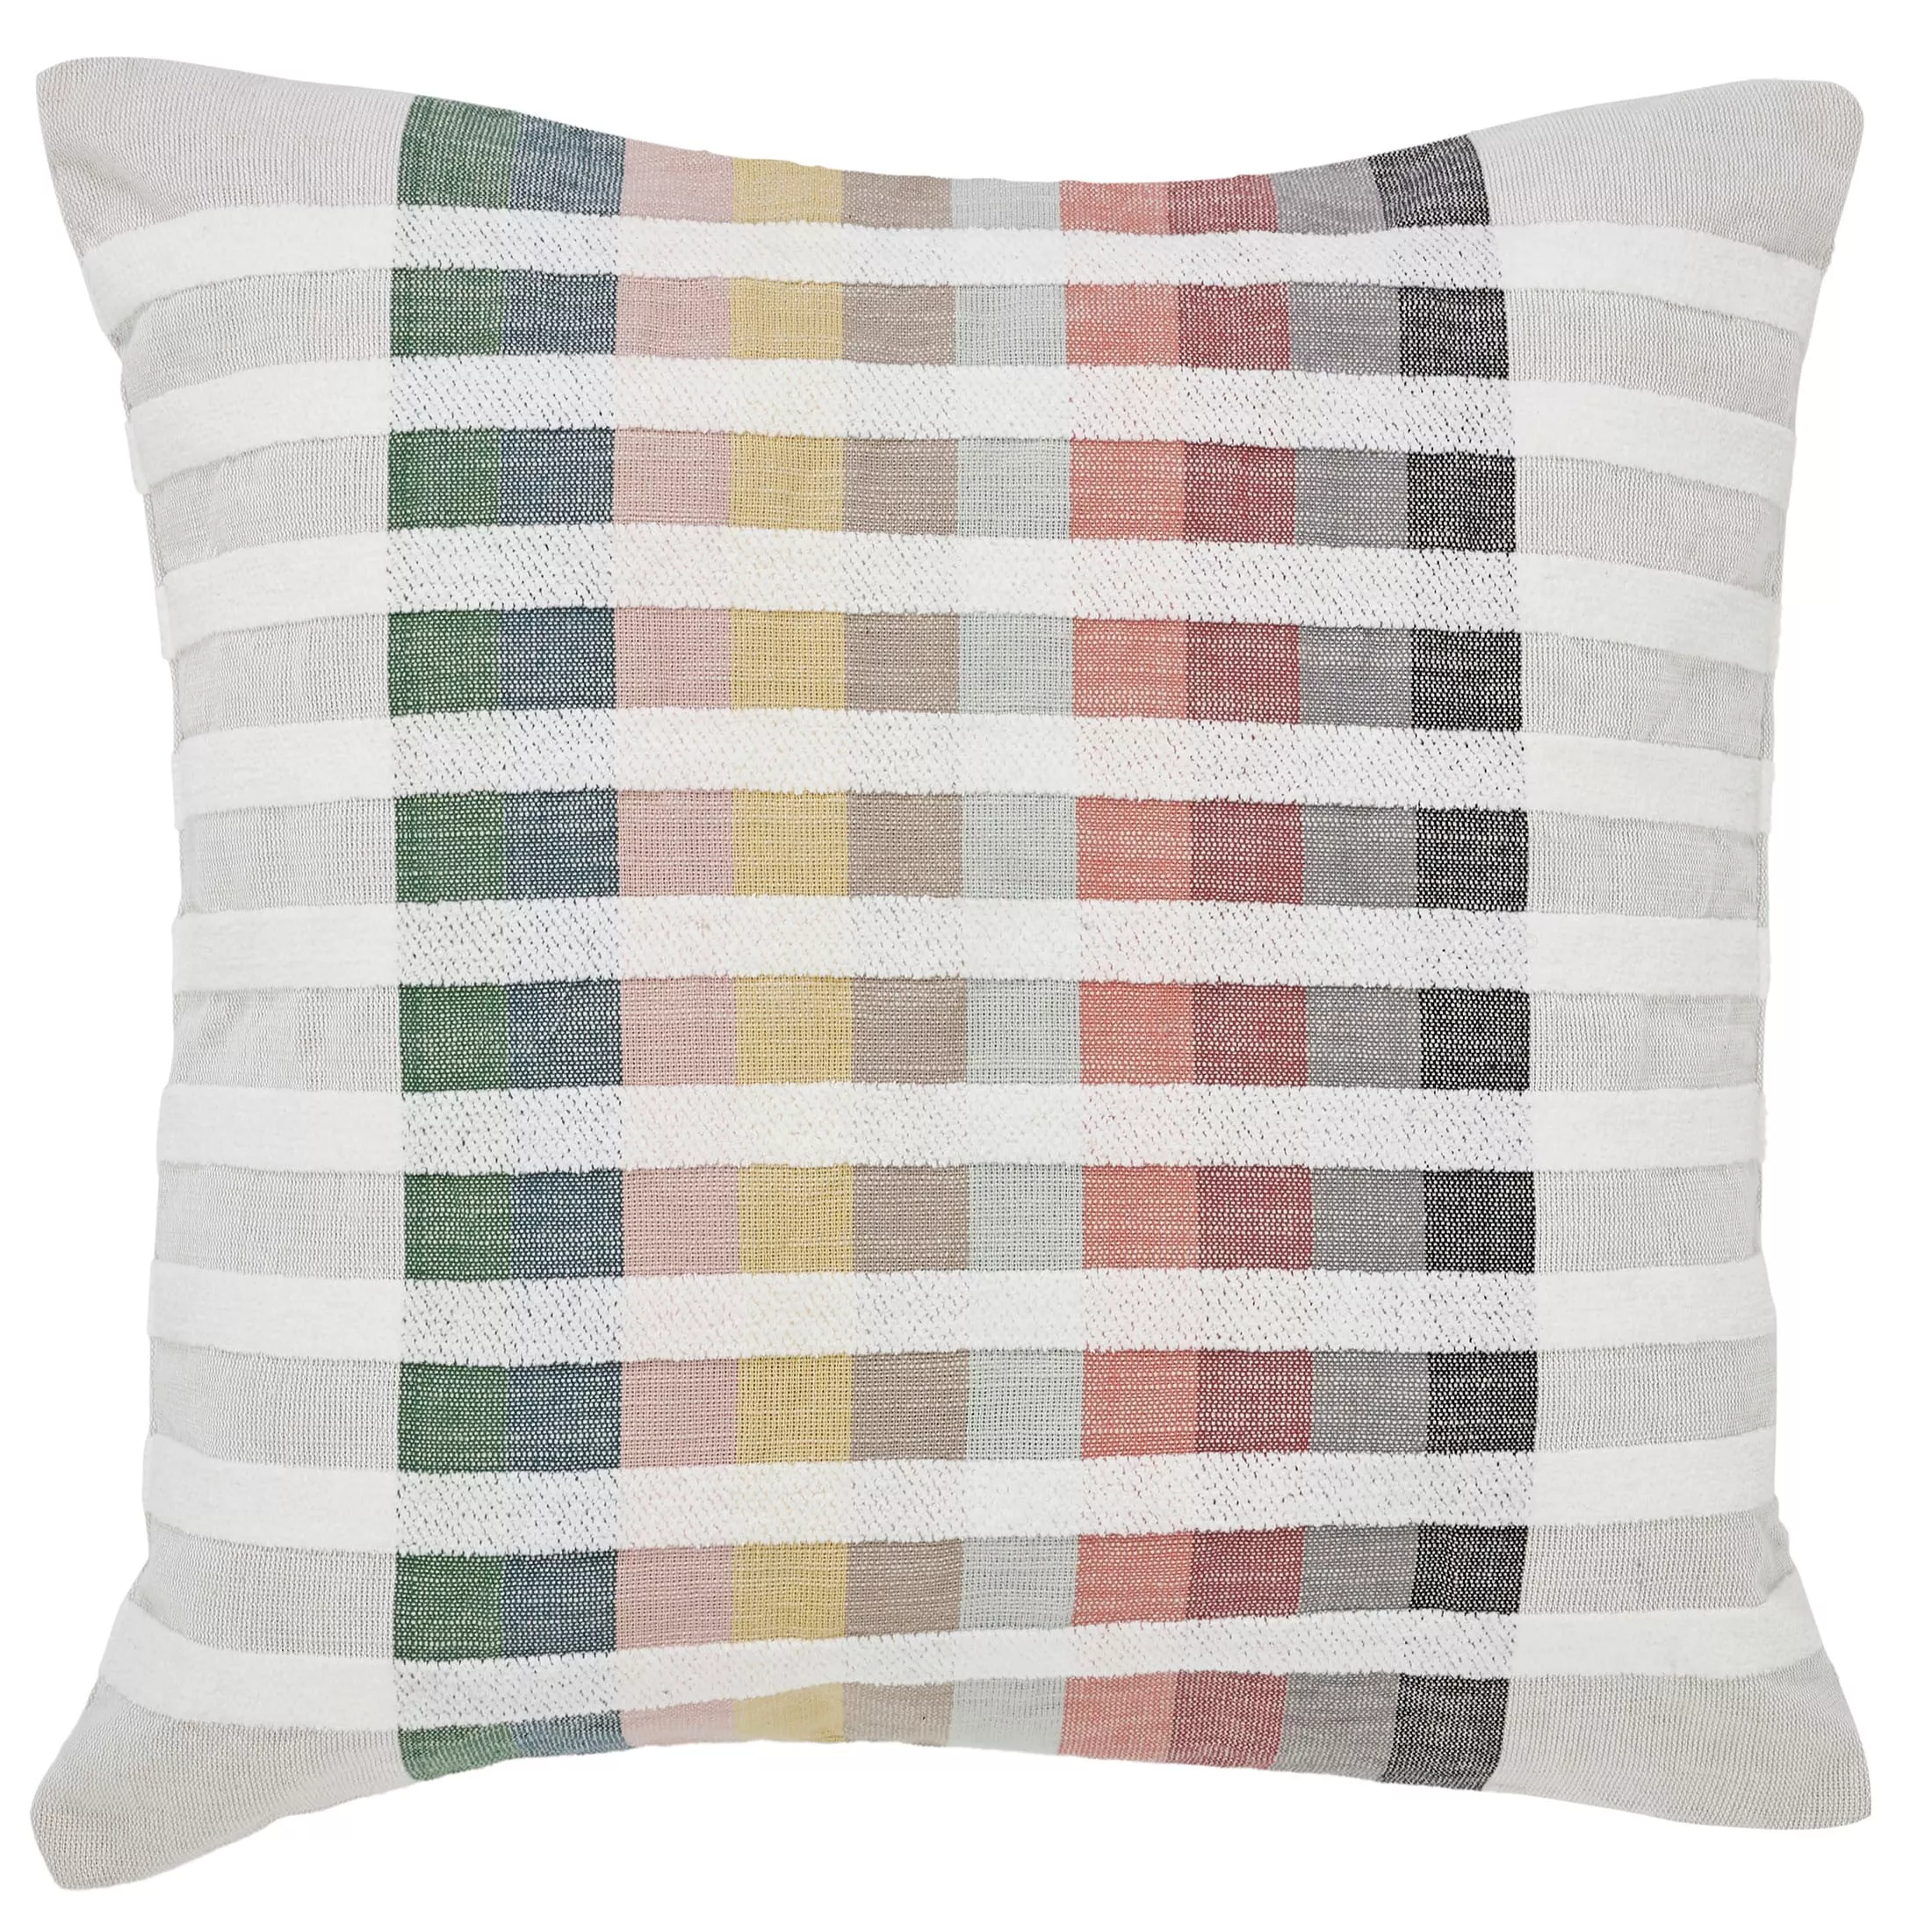 Mainstays Woven Stripe Decorative Pillow, 18 x 18, Gray